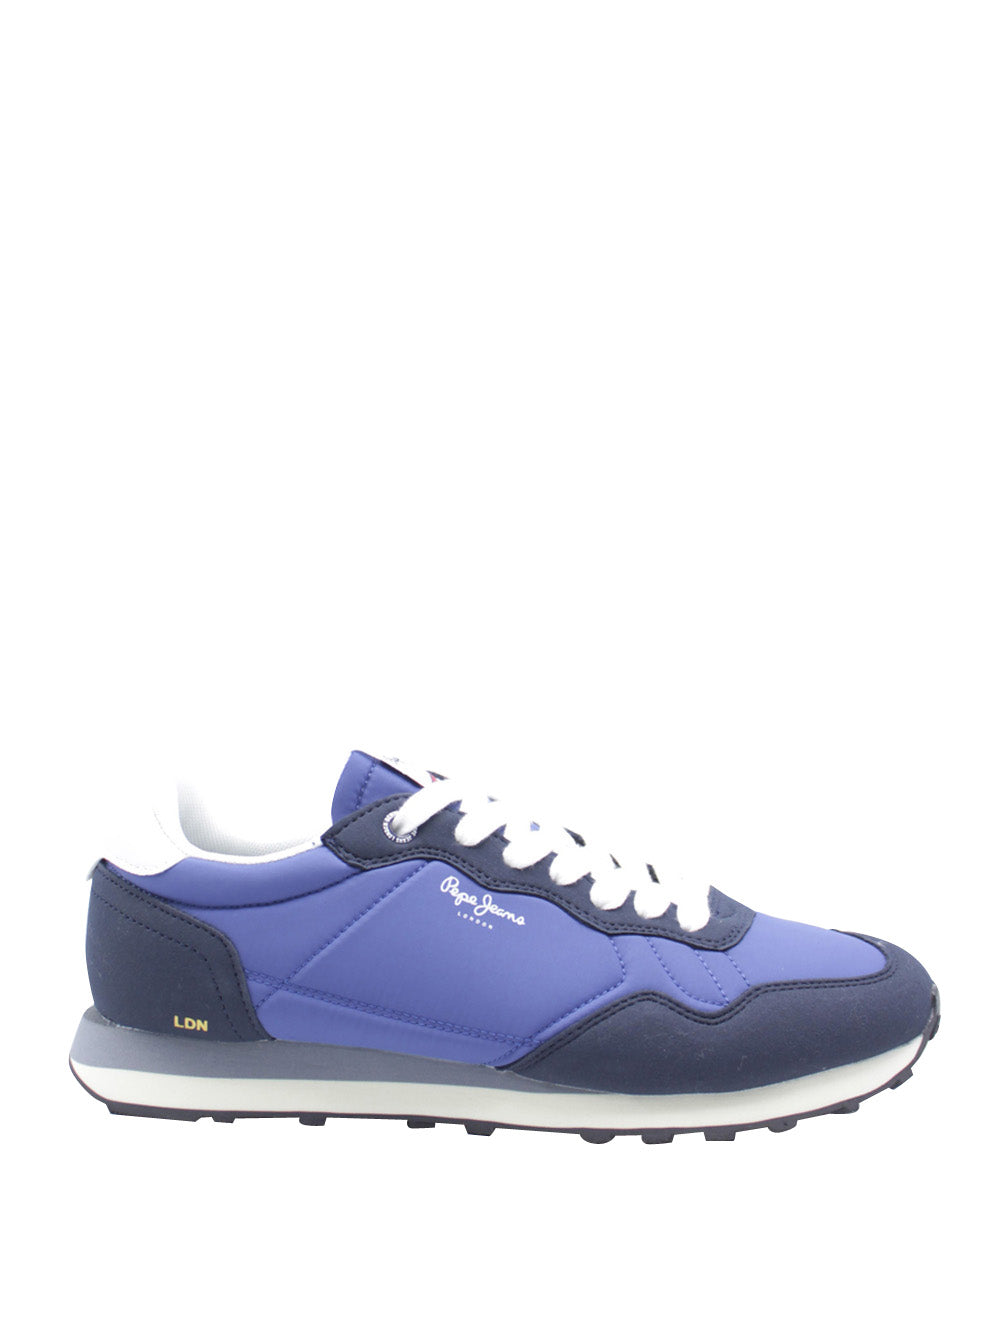 PEPE JEANS Sneakers Uomo - Blu modello PMS40010